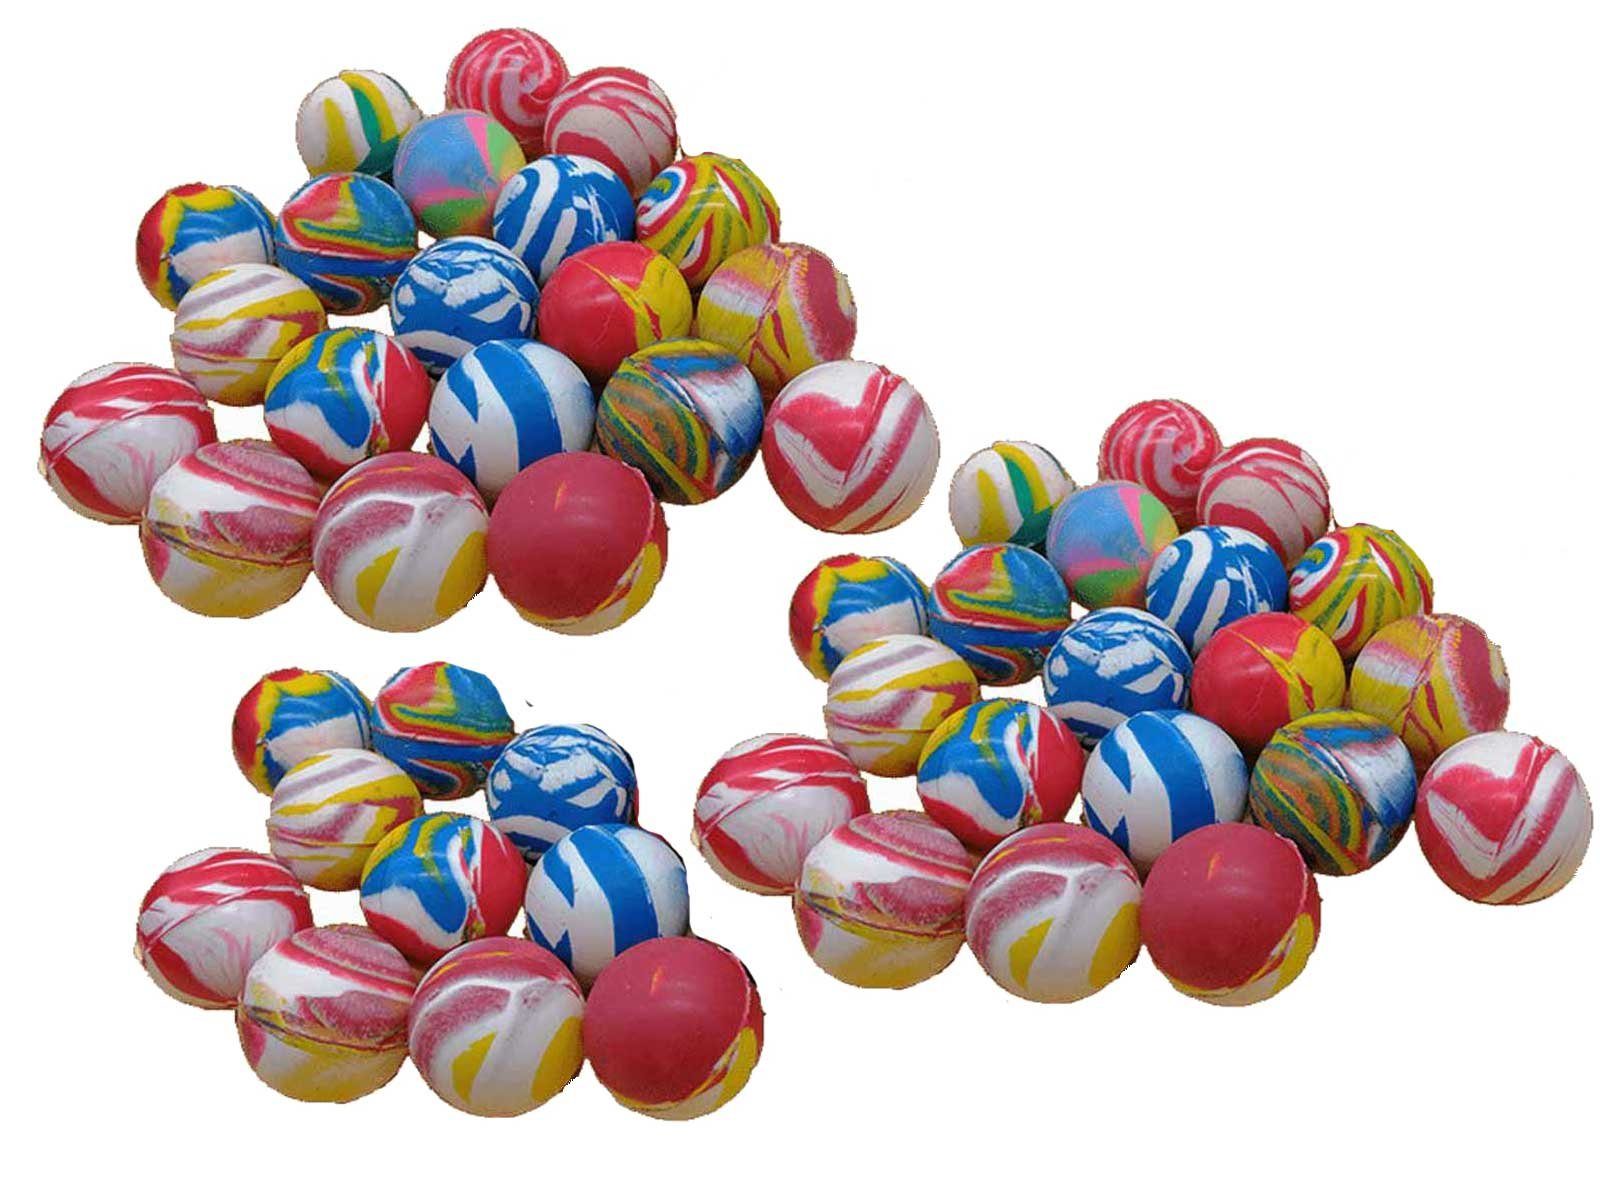 25 Maines marmoriert Tombola Ball Flummi x Kindergeburtstag 50 (Spar-Set) mm Mitgebsel